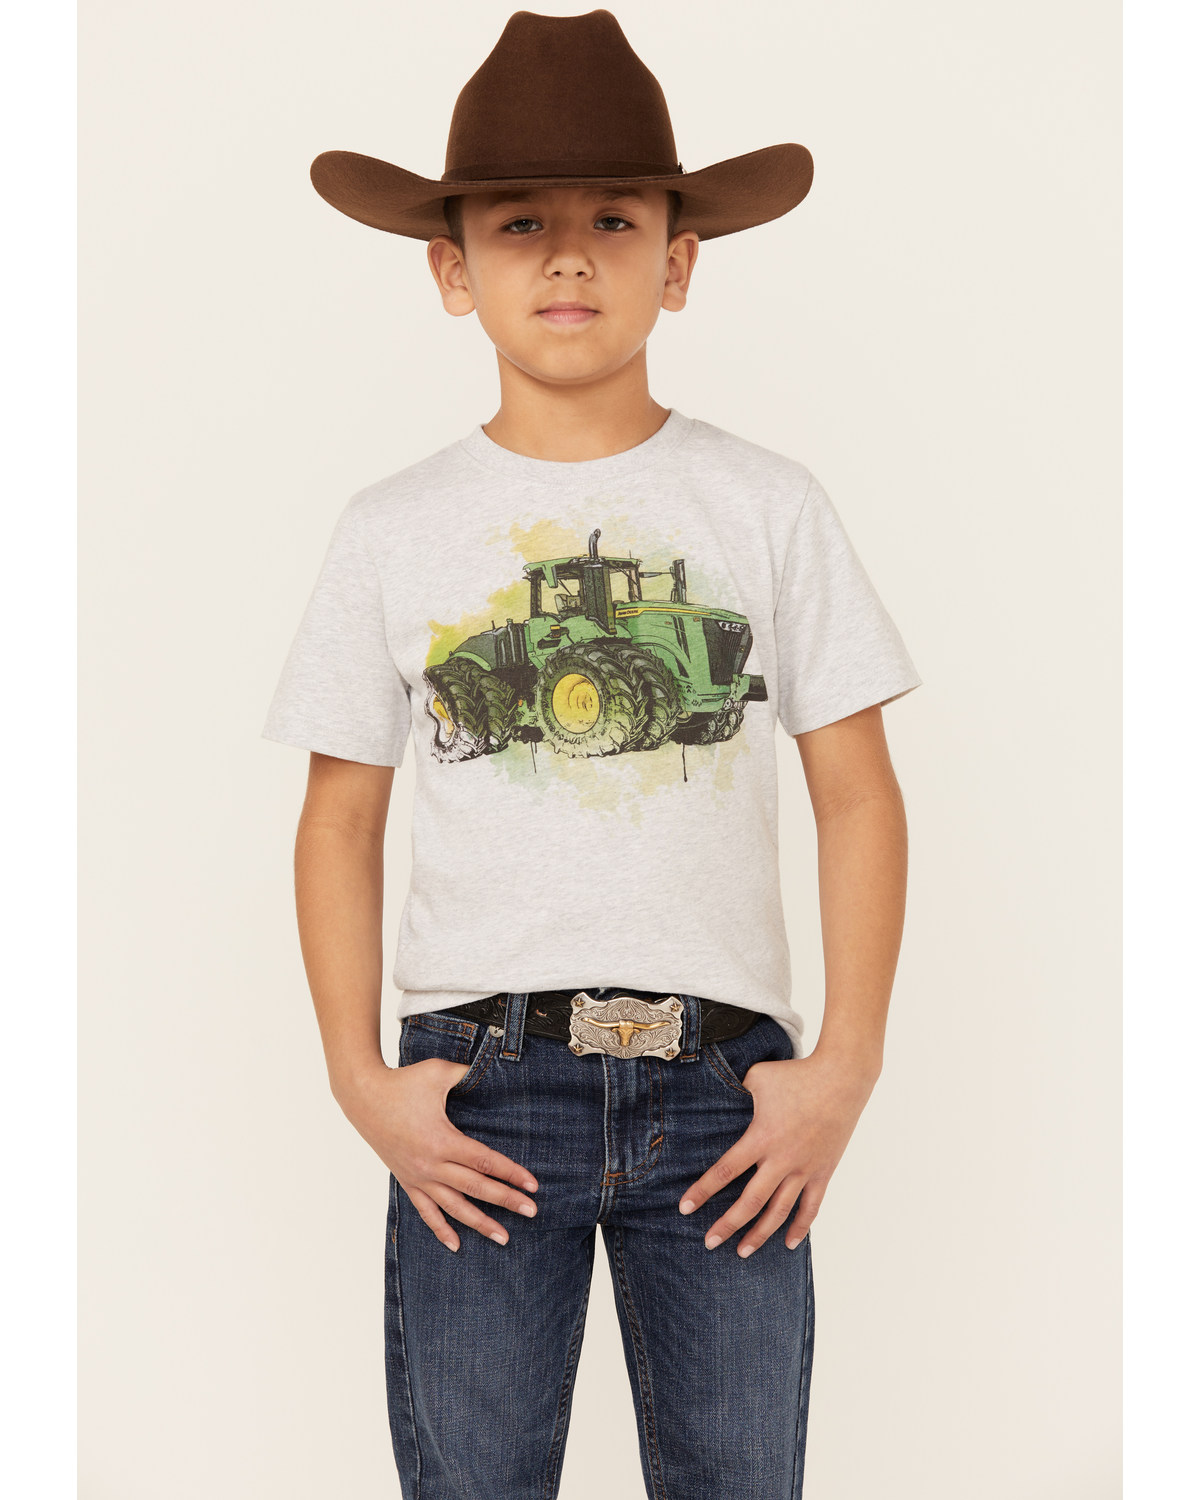 John Deere Little Boys' Digital Tractor Short Sleeve Graphic T-Shirt